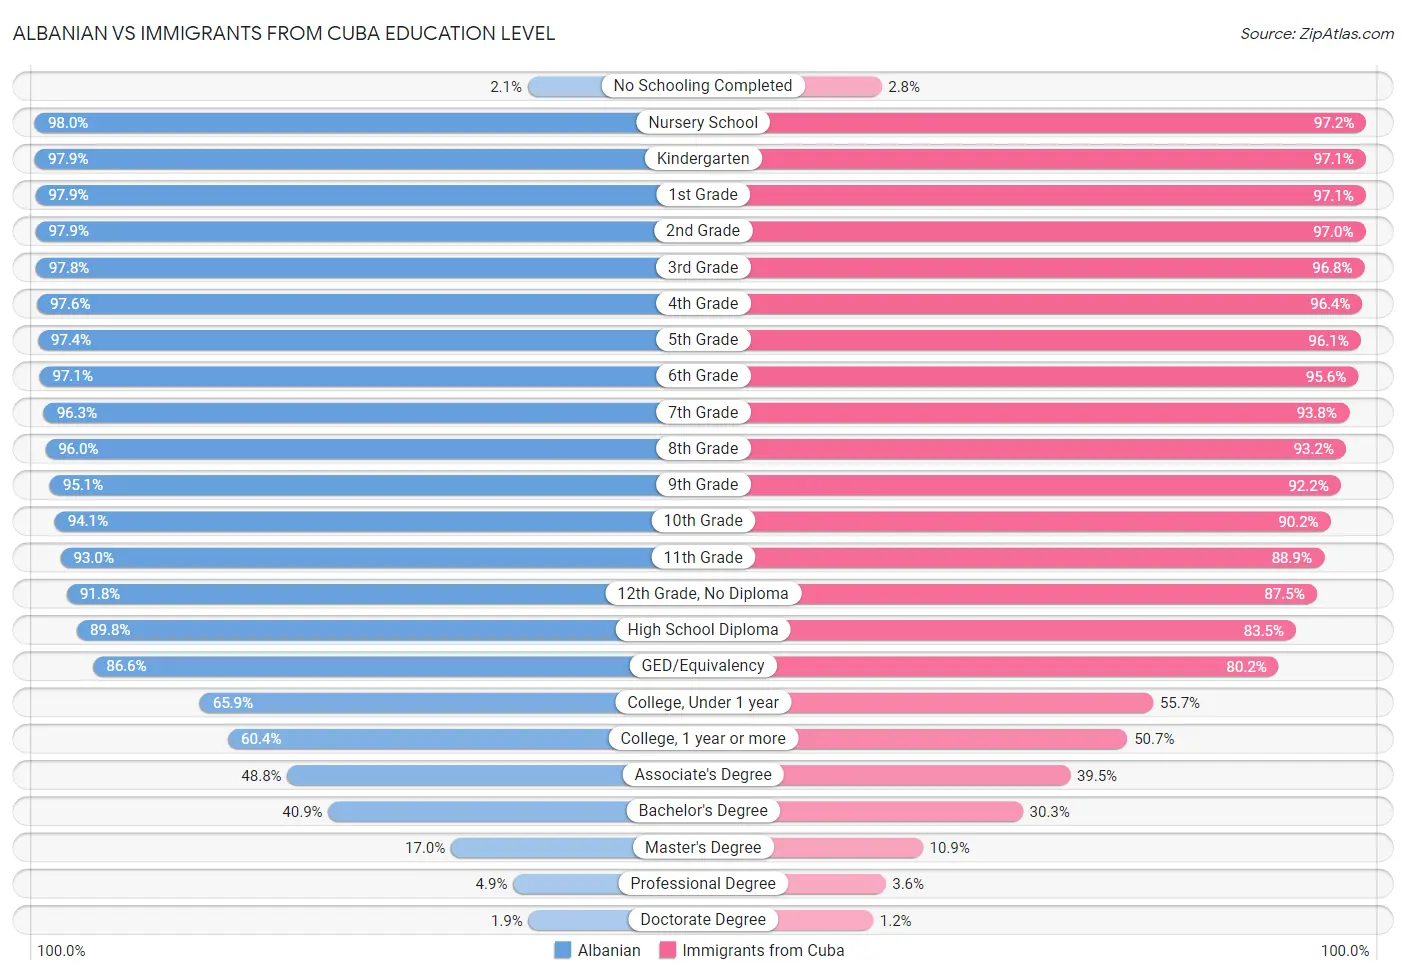 Albanian vs Immigrants from Cuba Education Level